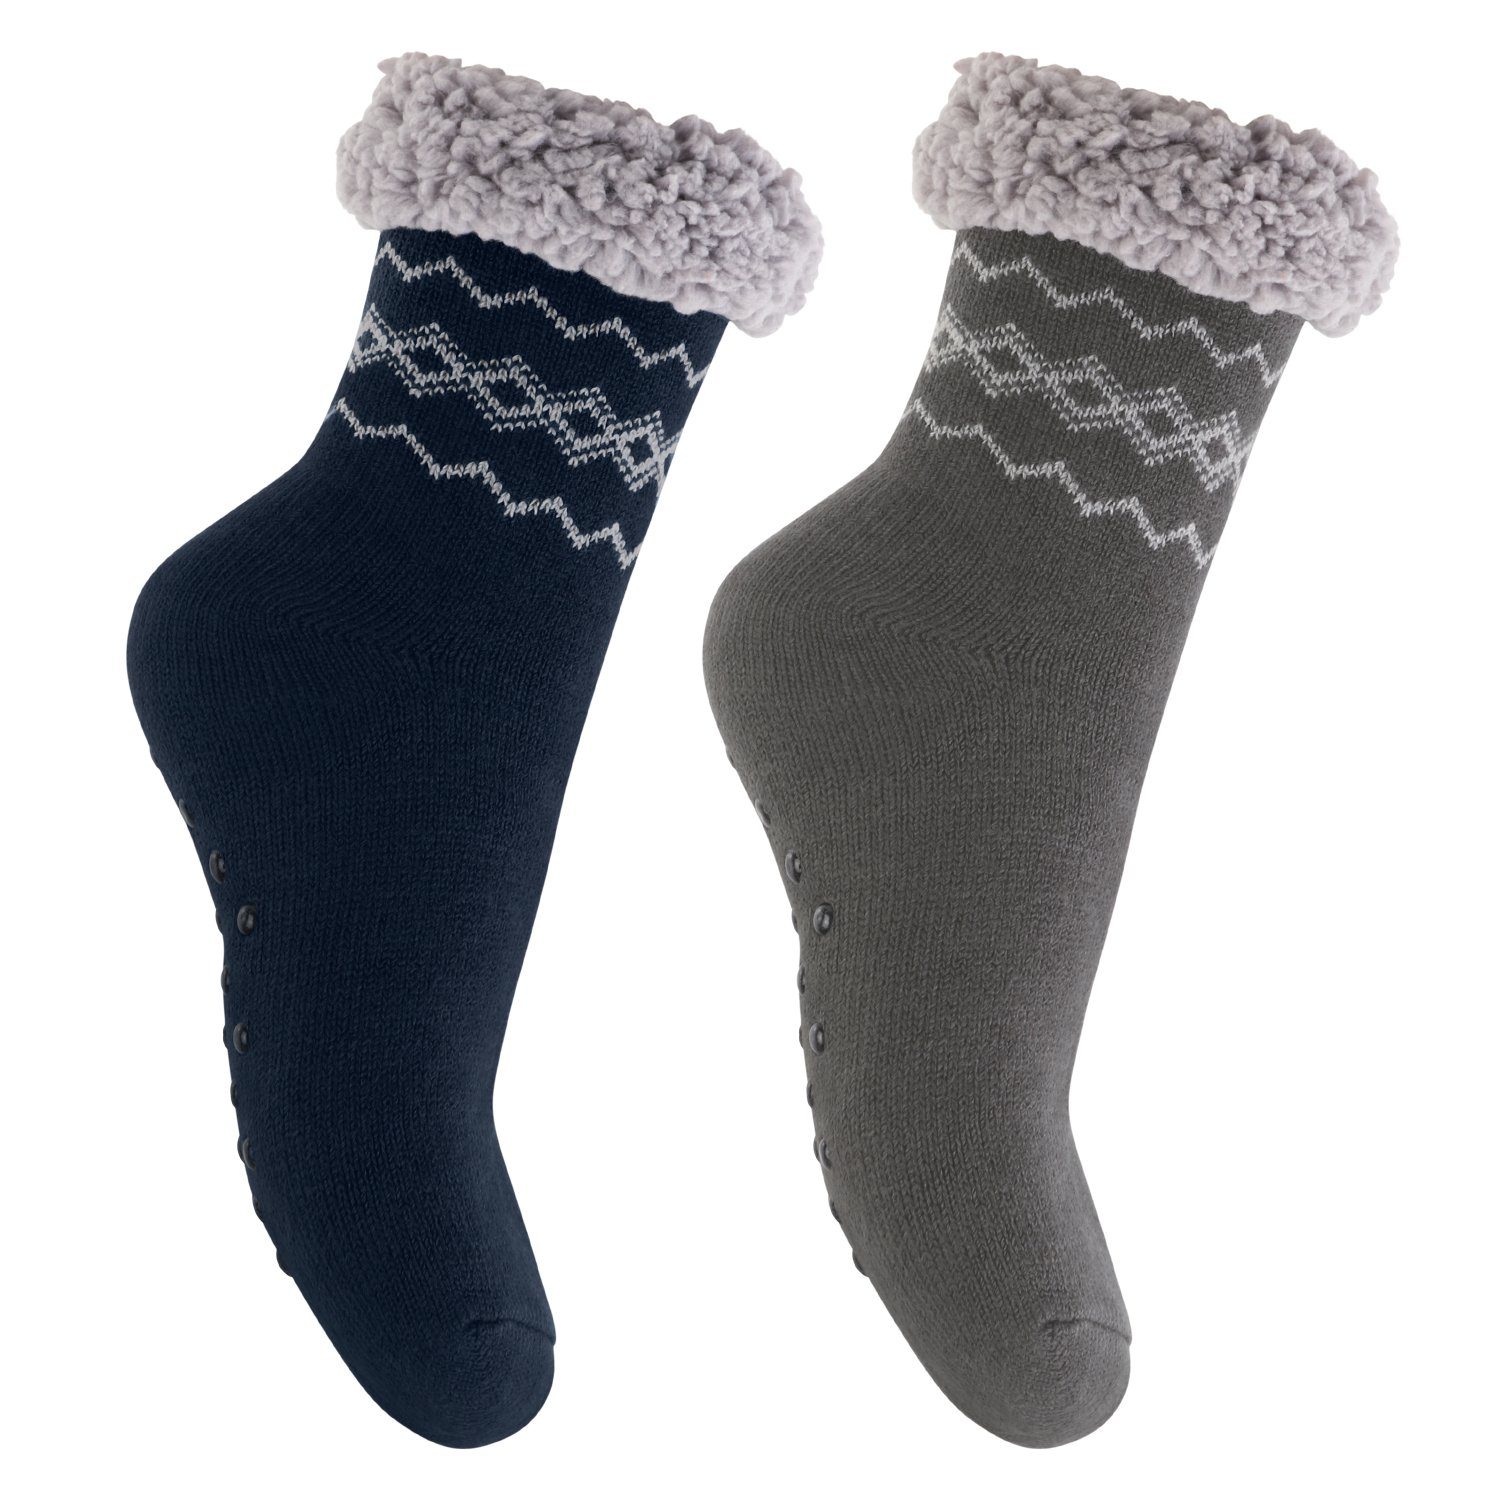 Footstar ABS-Socken Winter Haussocken für Damen & Herren (1/2 Paar) Kuschelsocken 2er Anthra-Navy